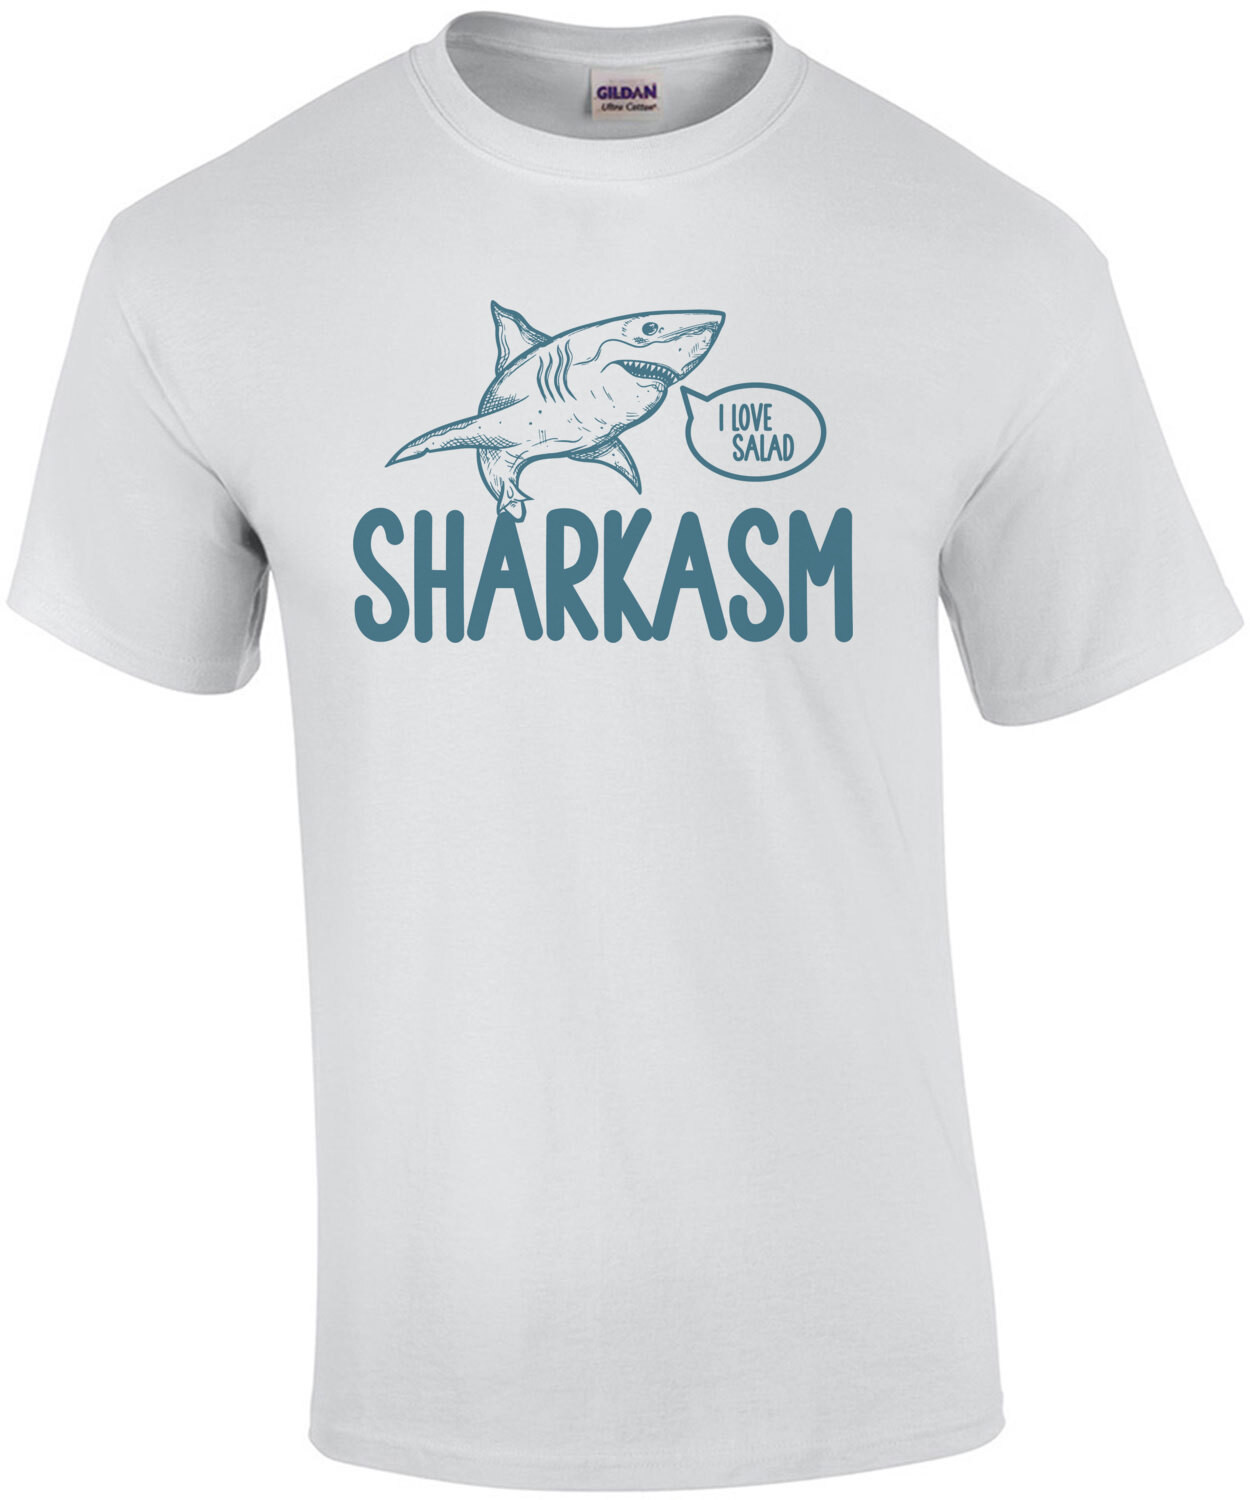 Sharkasm - I love Salad - Shark Pun Sarcasm Funny T-Shirt